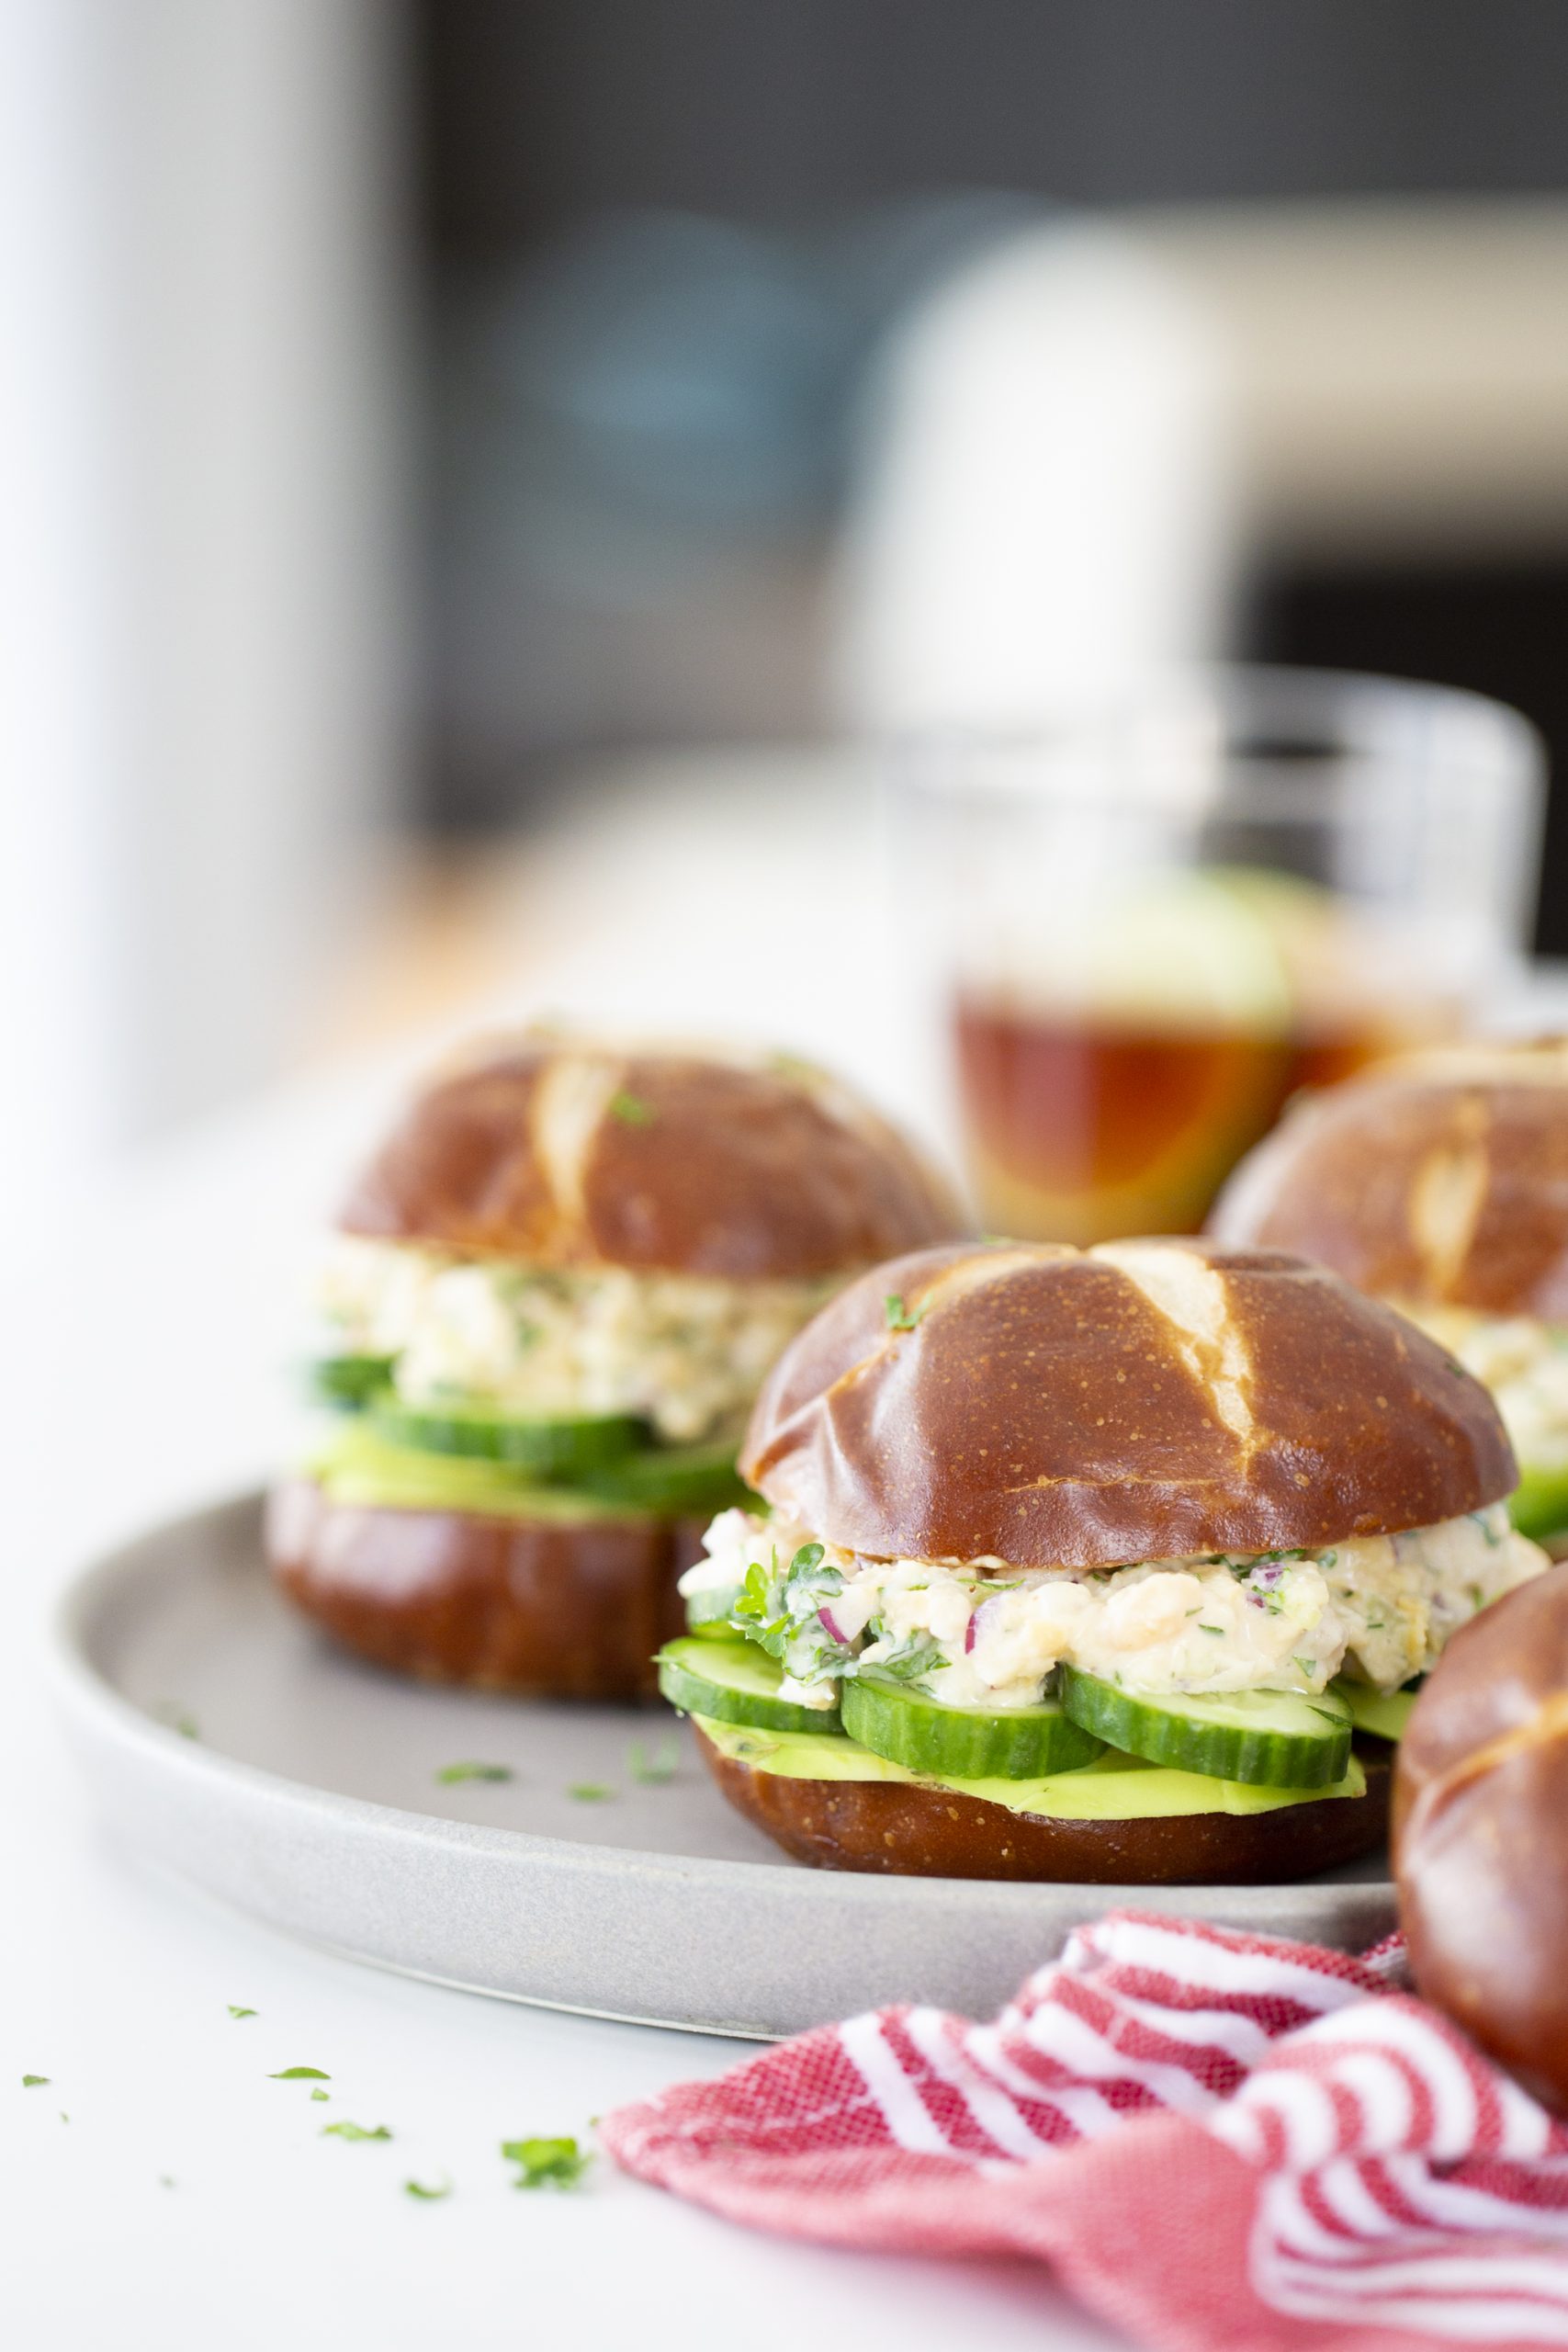 Vegan "tuna" sandwiches on pretzel bread